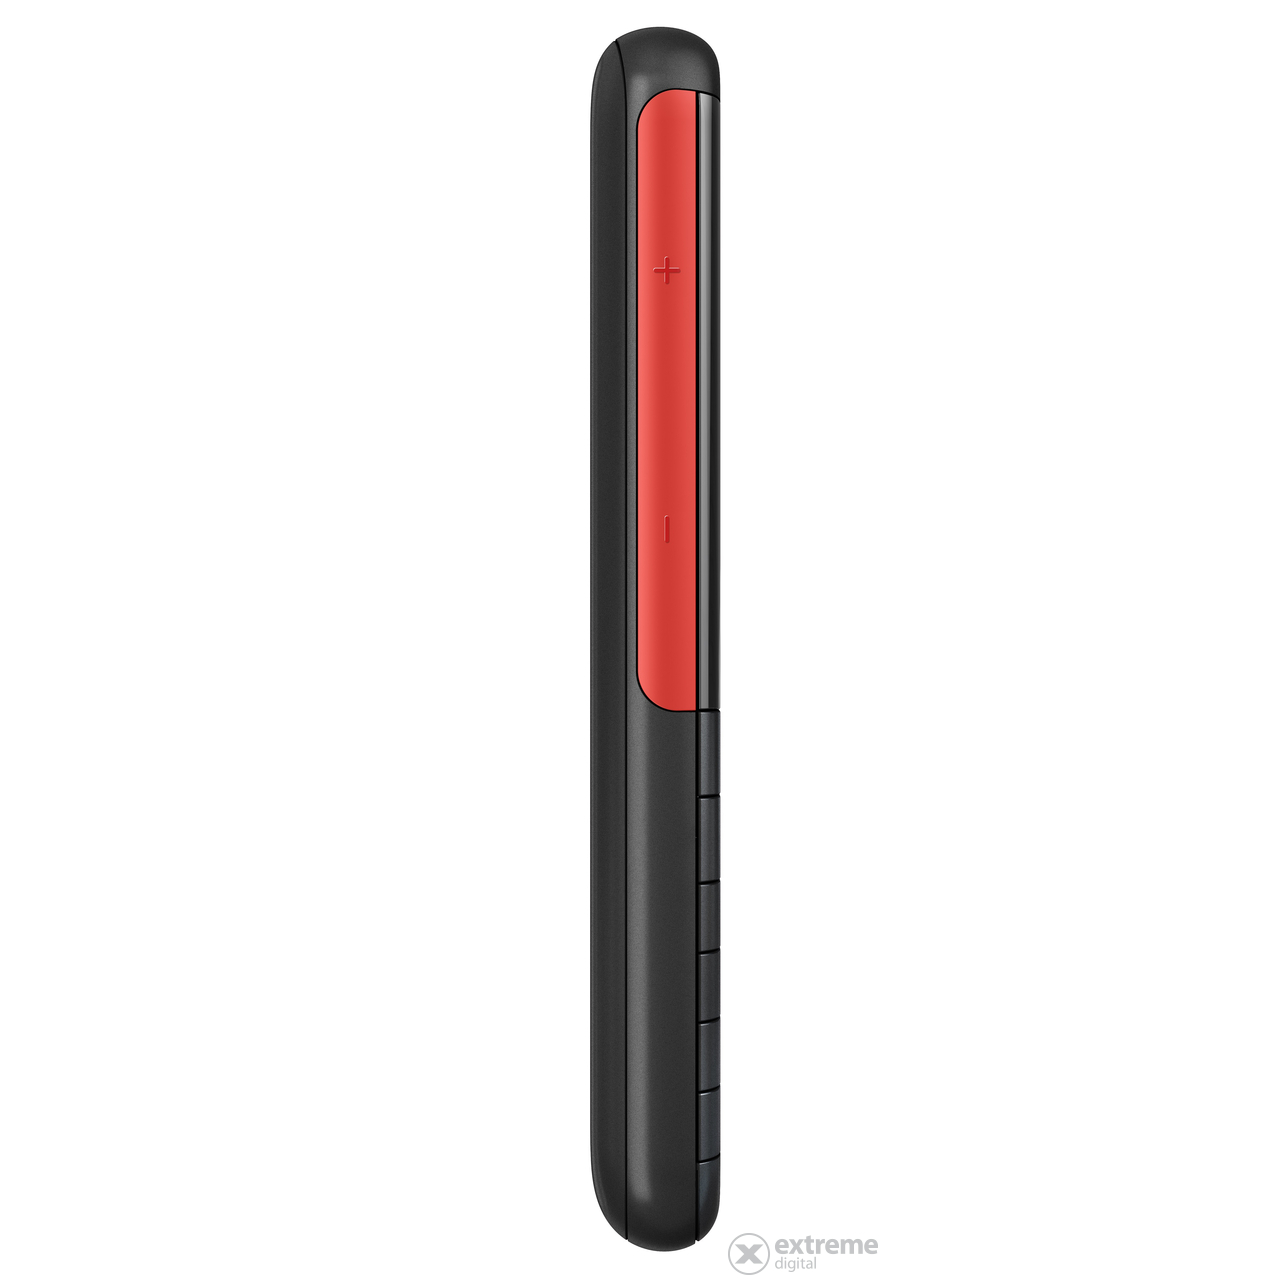 Nokia 5310 Dual SIM mobilni telefon, Black/Red